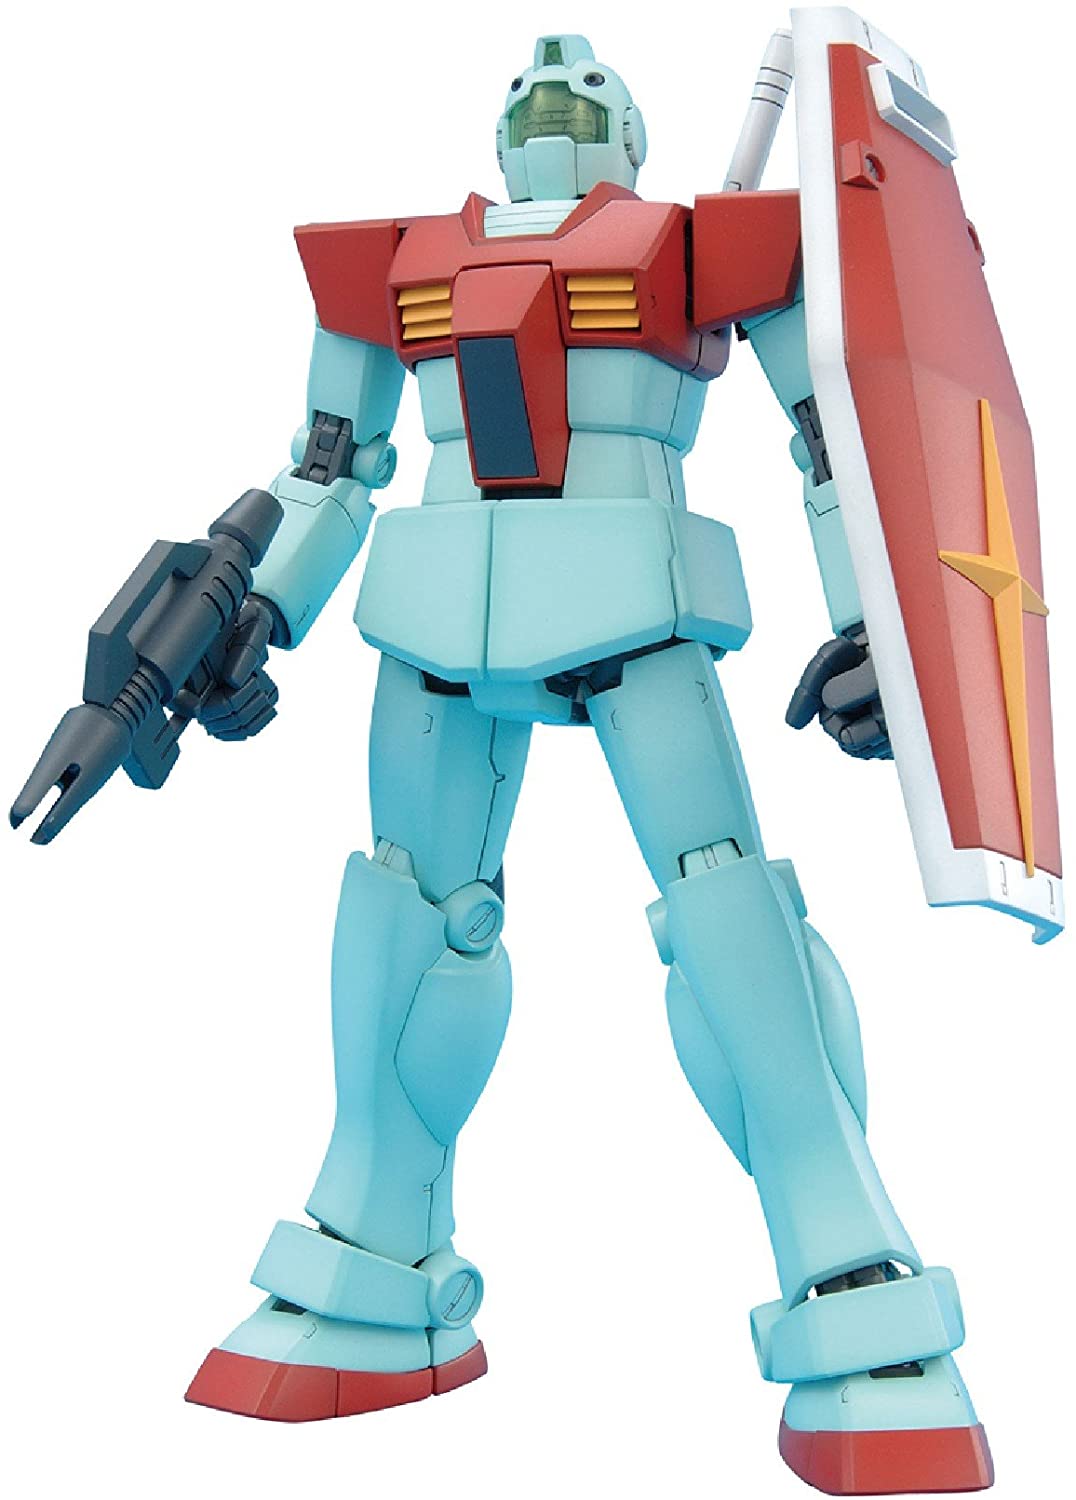 Gundam Rgm-79 Gm (Ver. 2.0) Mg 1/100 Model Kit